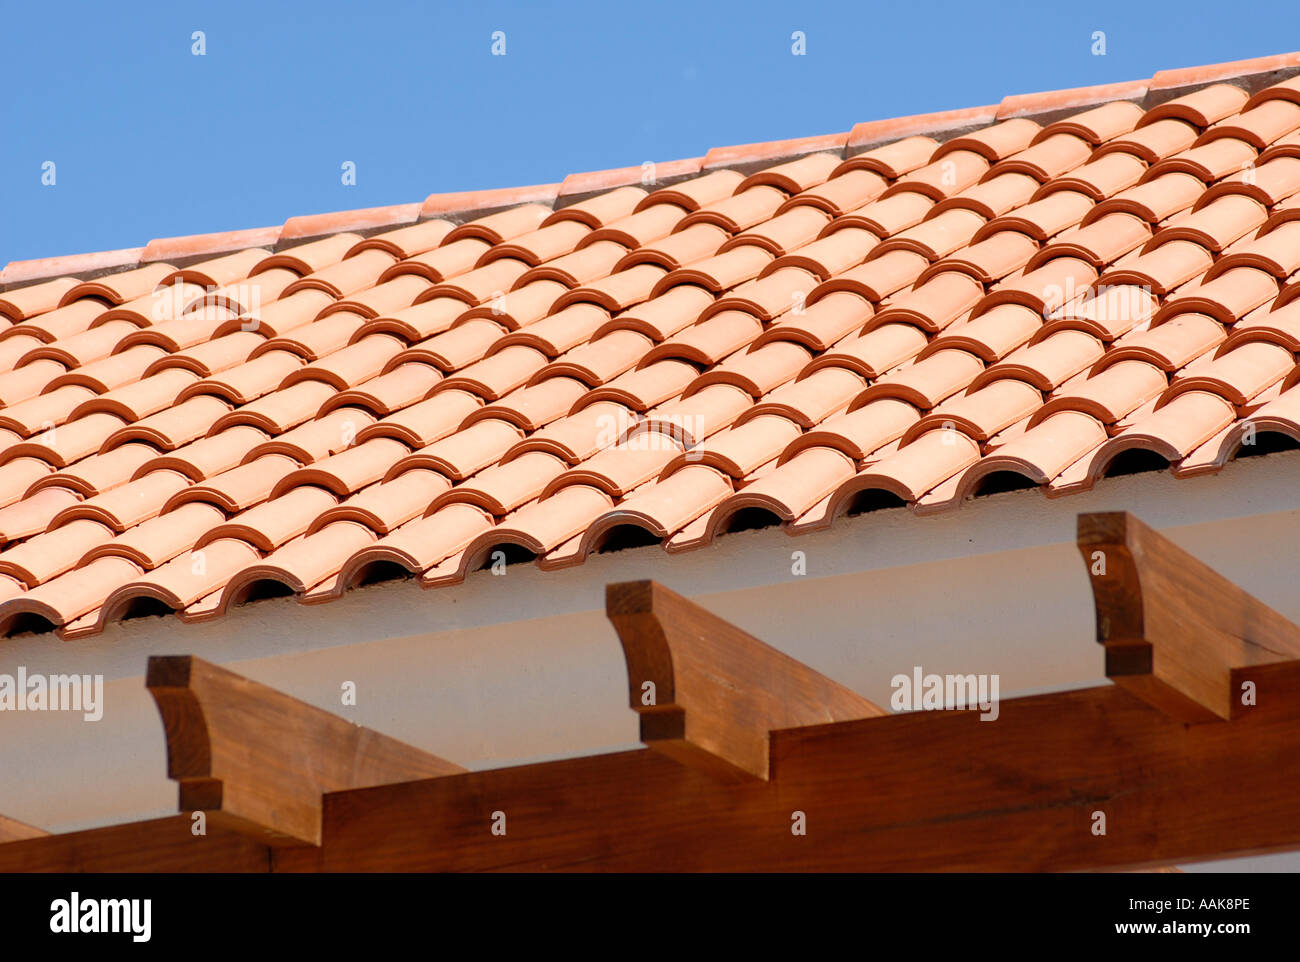 Roof tiles at Cavas Wine Lodge Mendoza Argentina Stock Photo